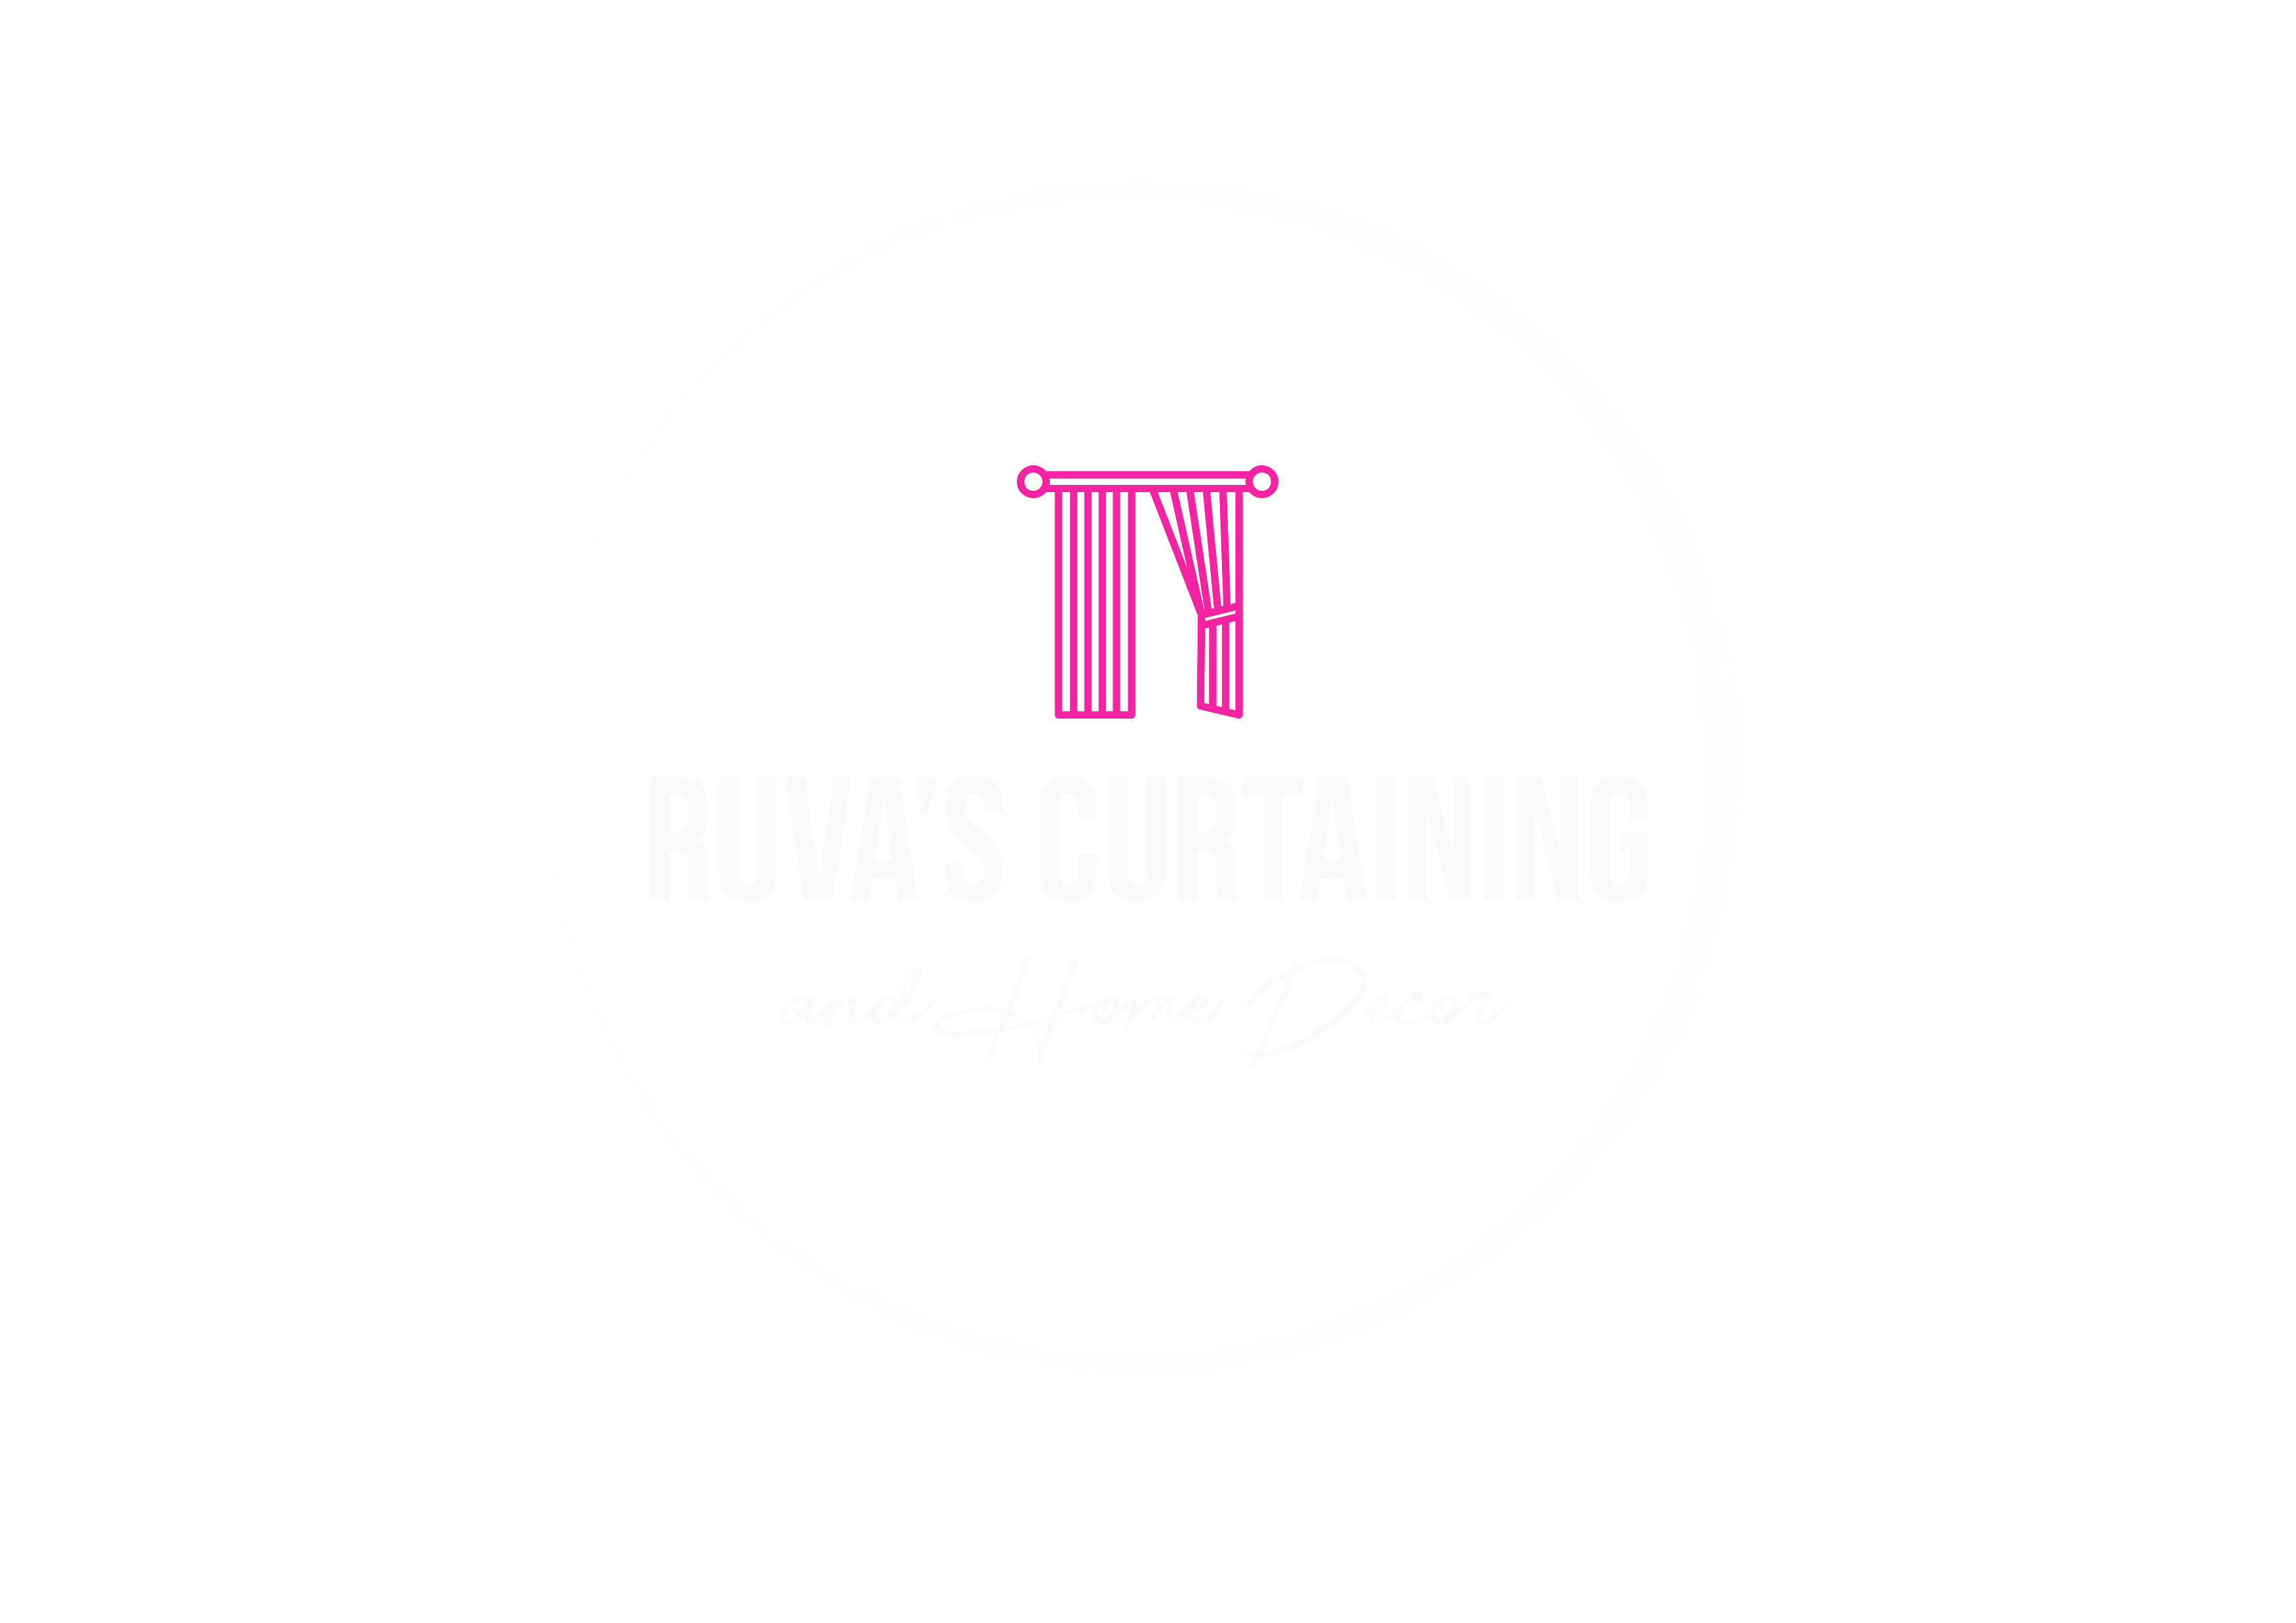 Ruva's Curtaining - and Home Decor